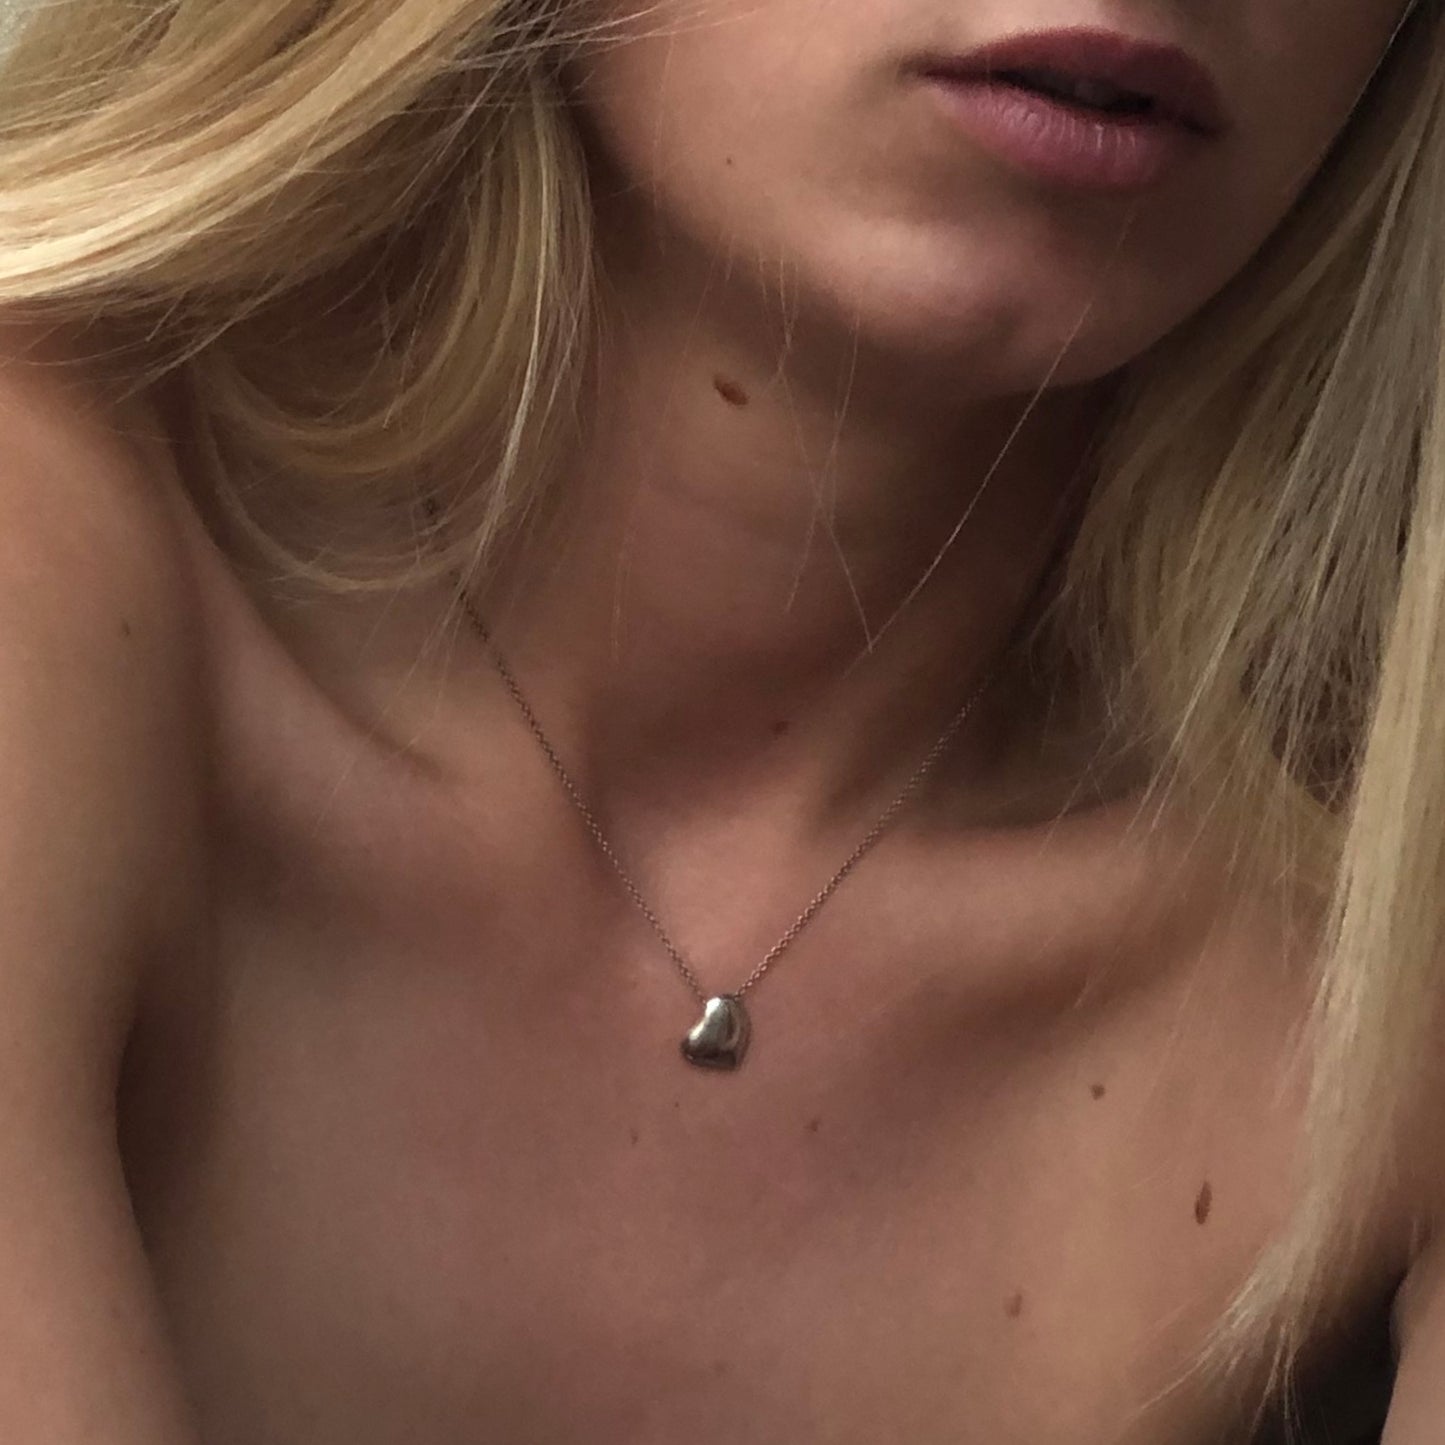 Tiffany & Co Heart Elsa Peretti necklace